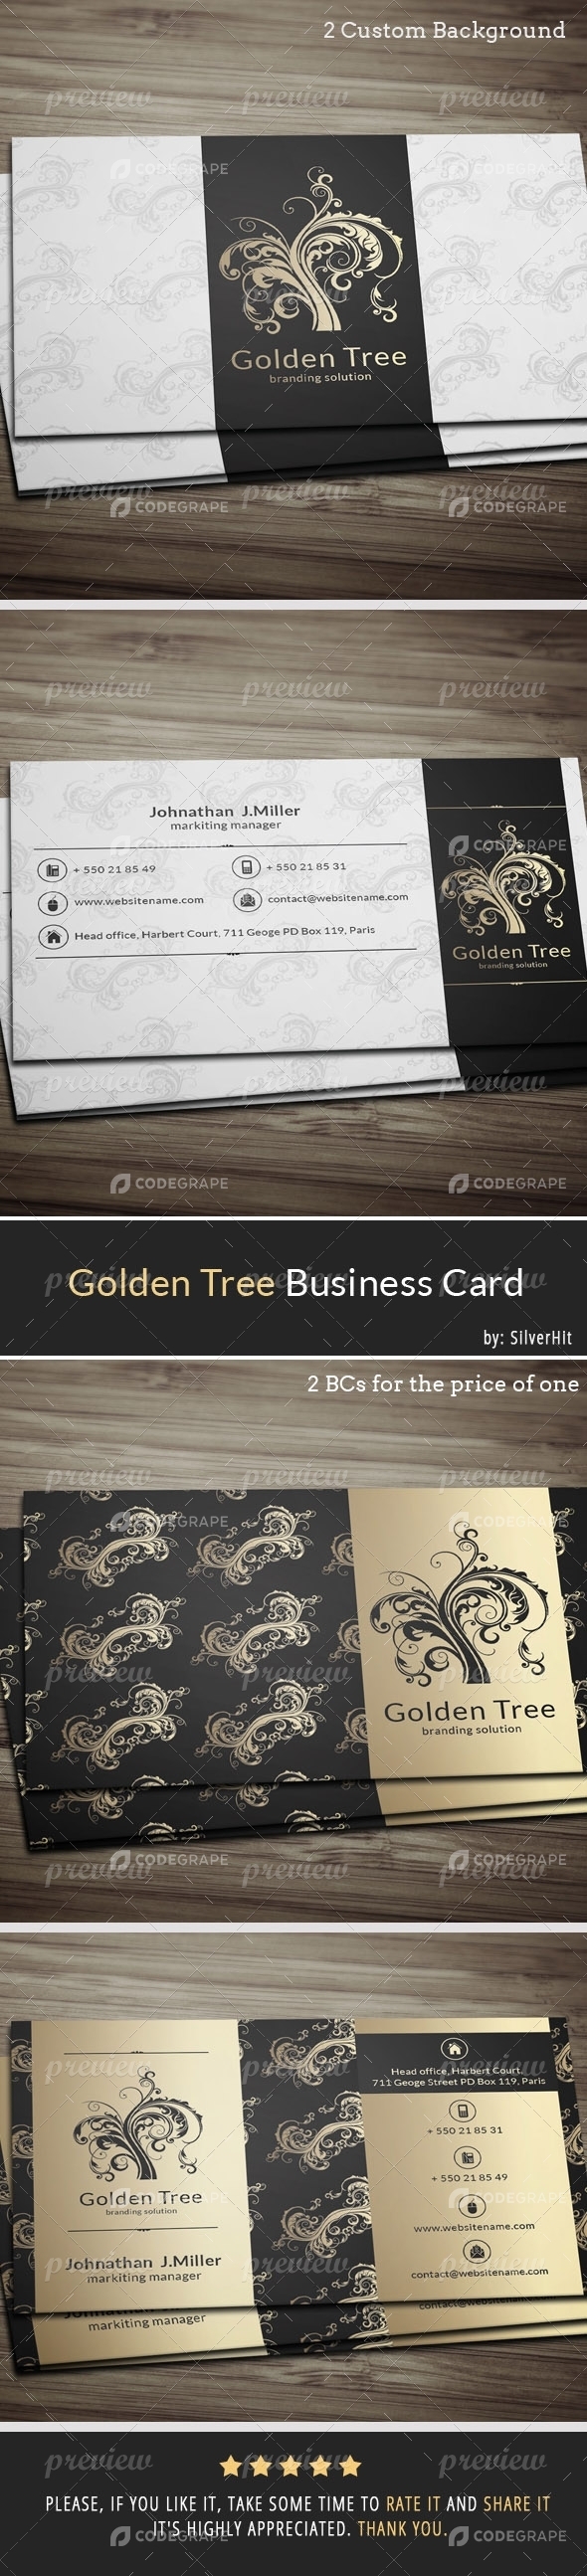 Golden Tree Business Card